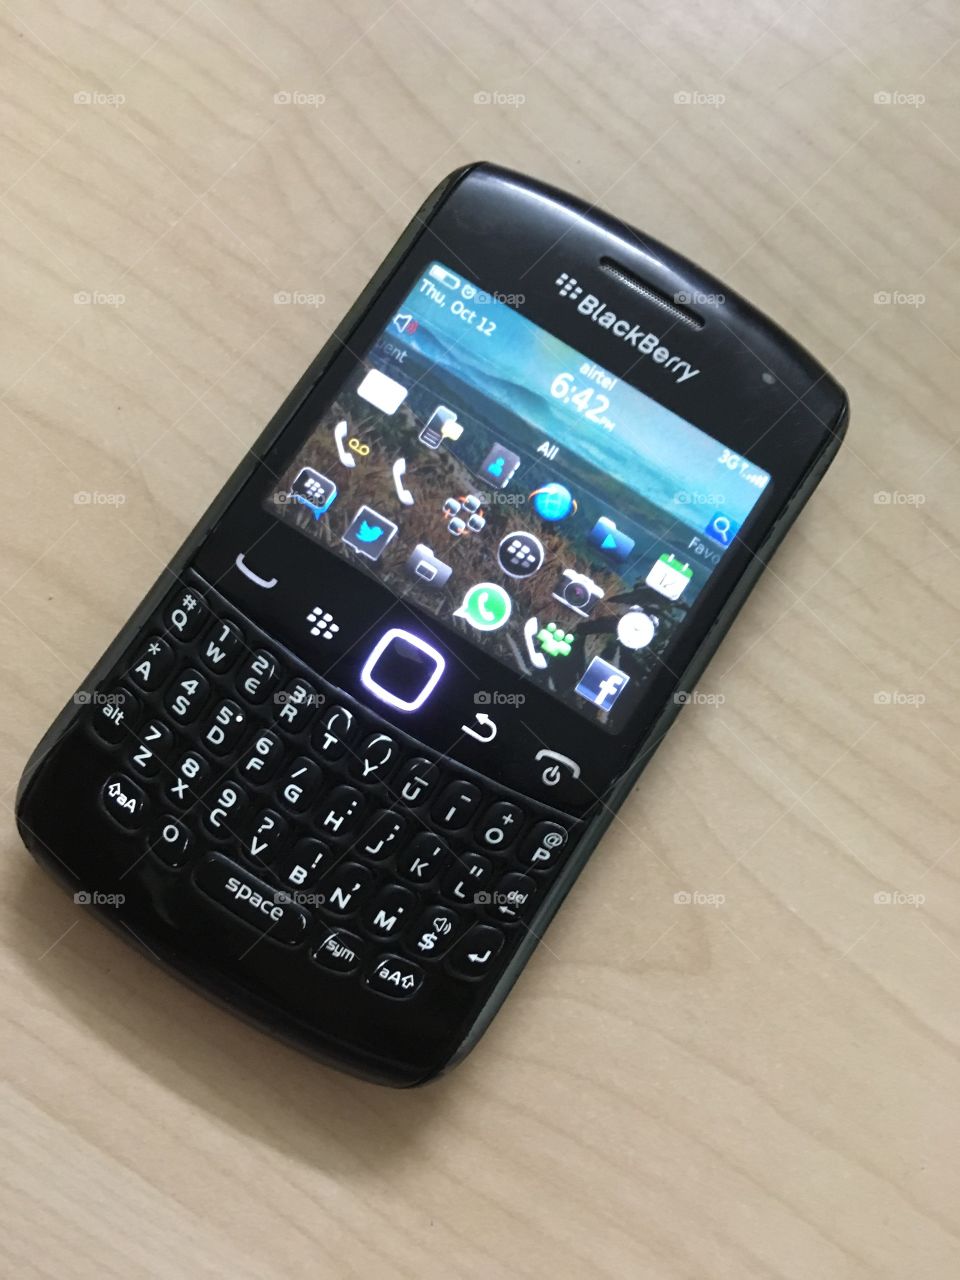 My Blackberry 